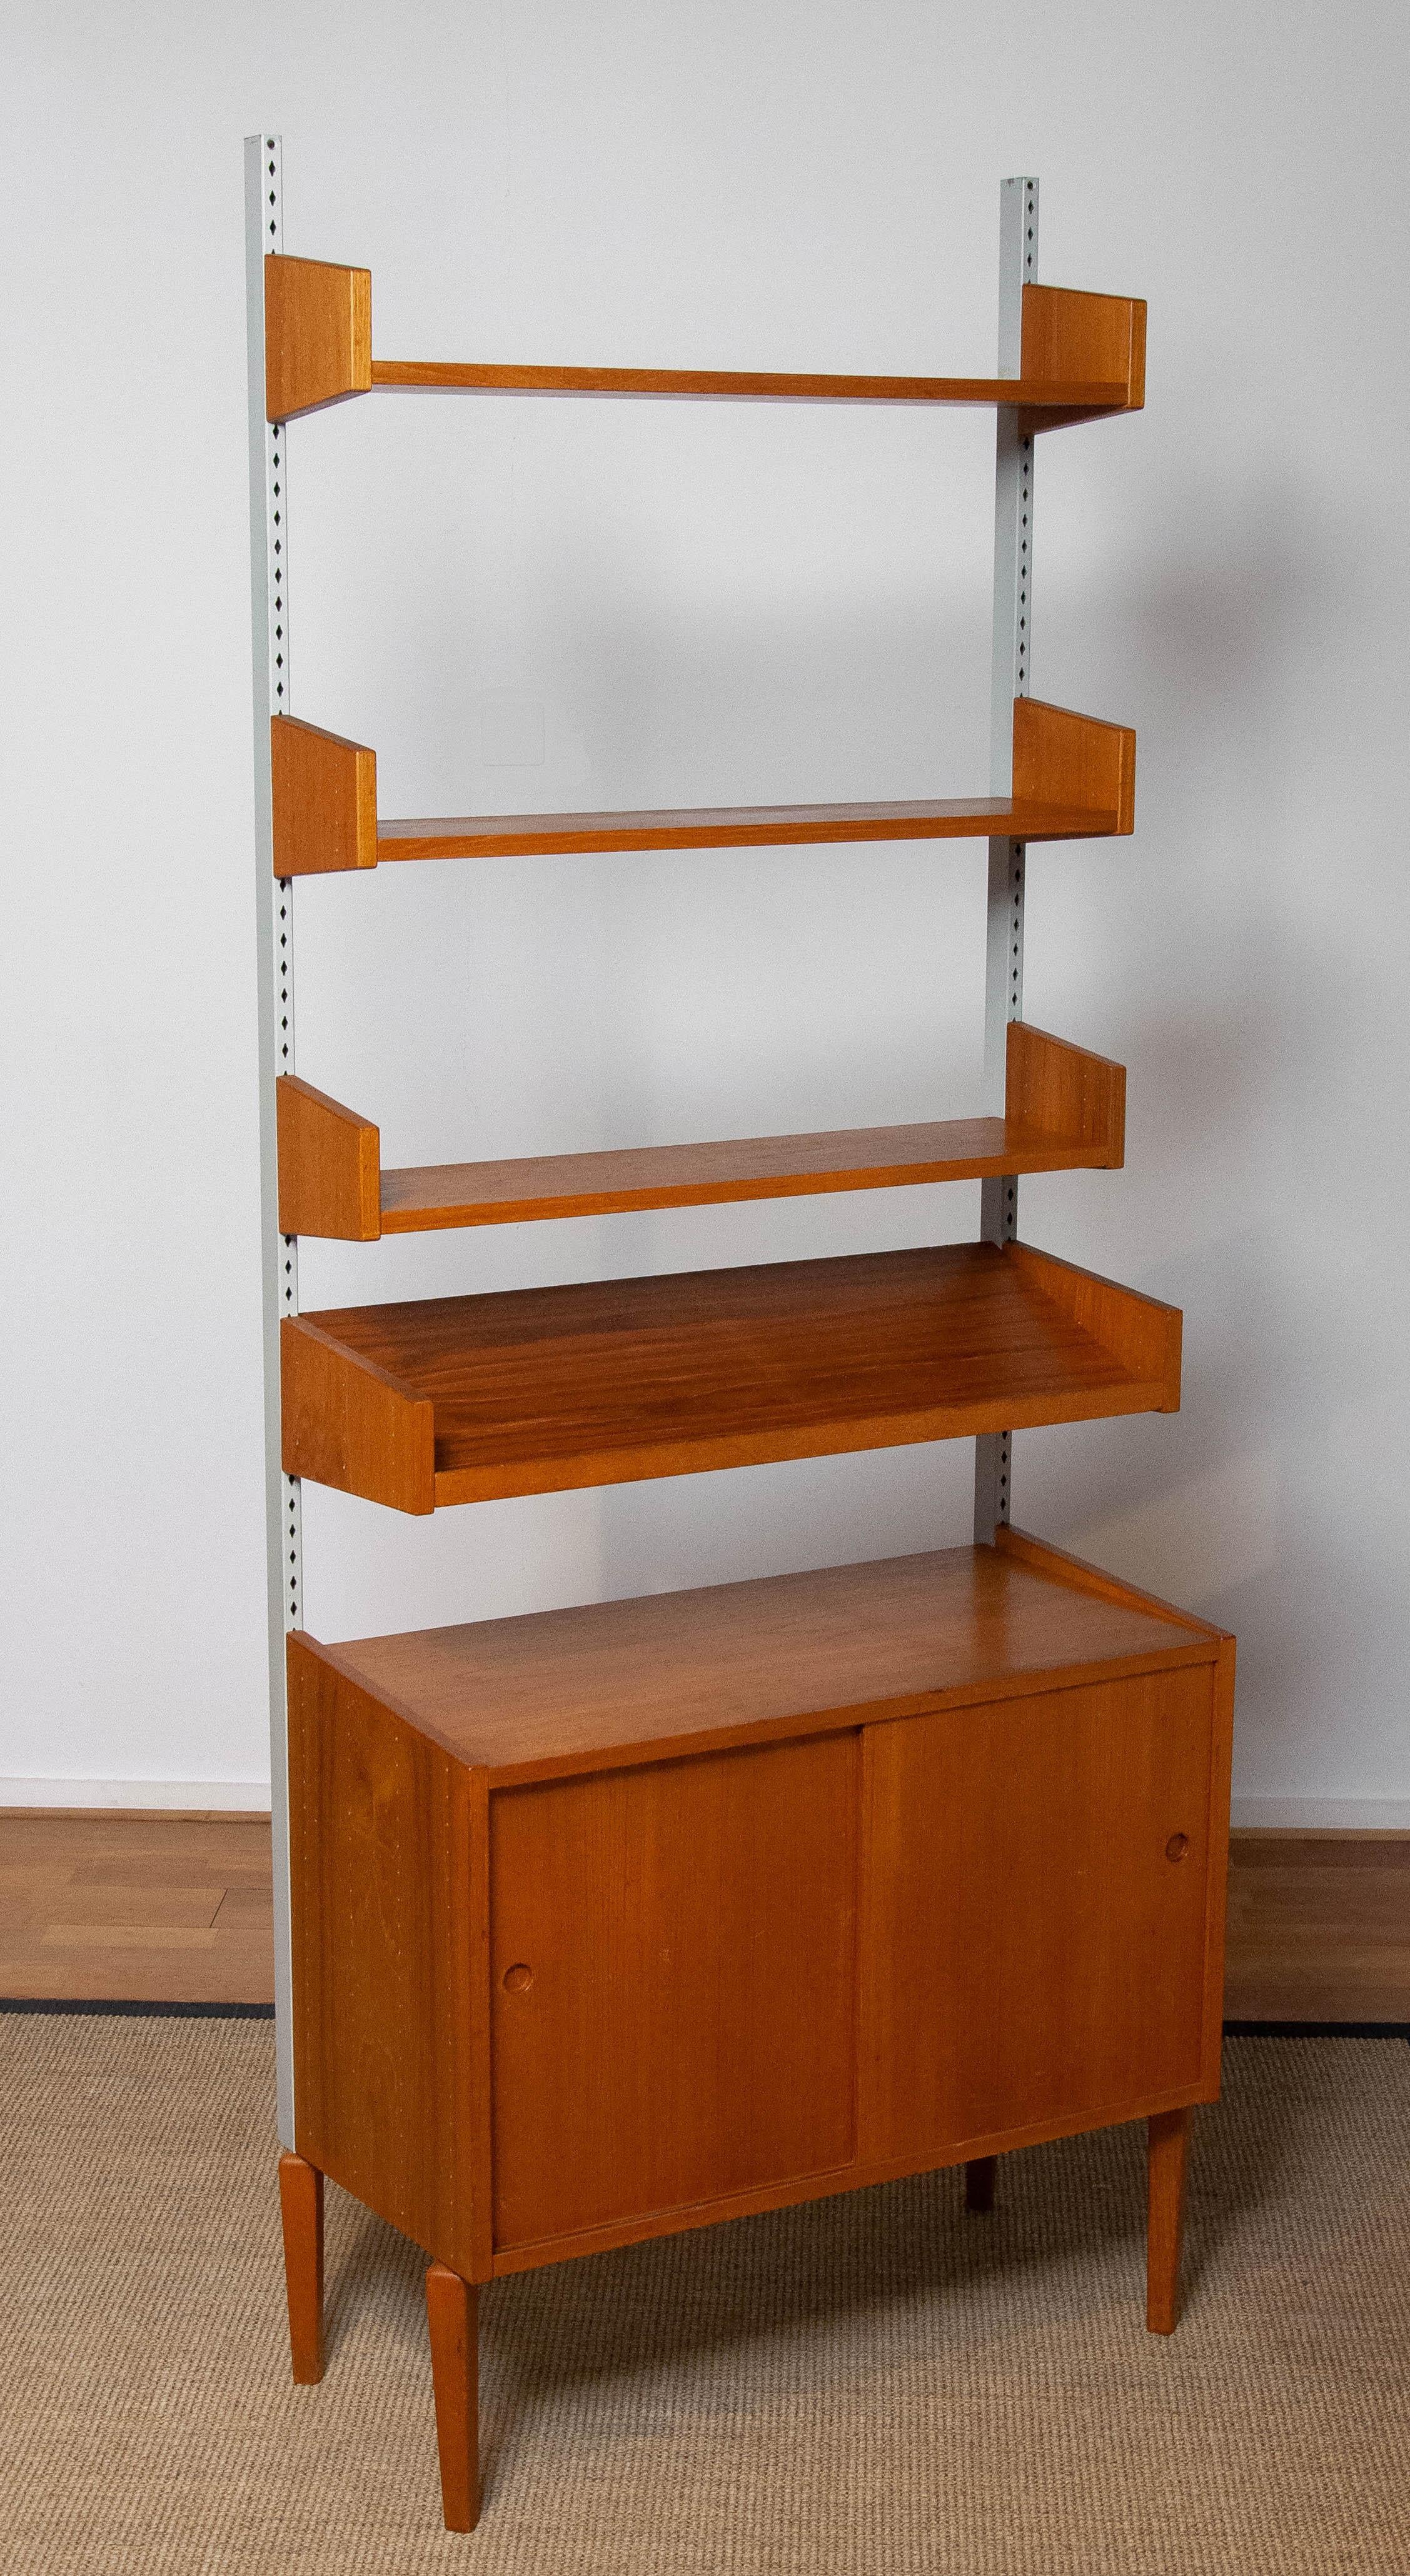 Swedish Teak Shelf System / Bookcase In Teak With Steel Bars By Harald Lundqvist 1950's